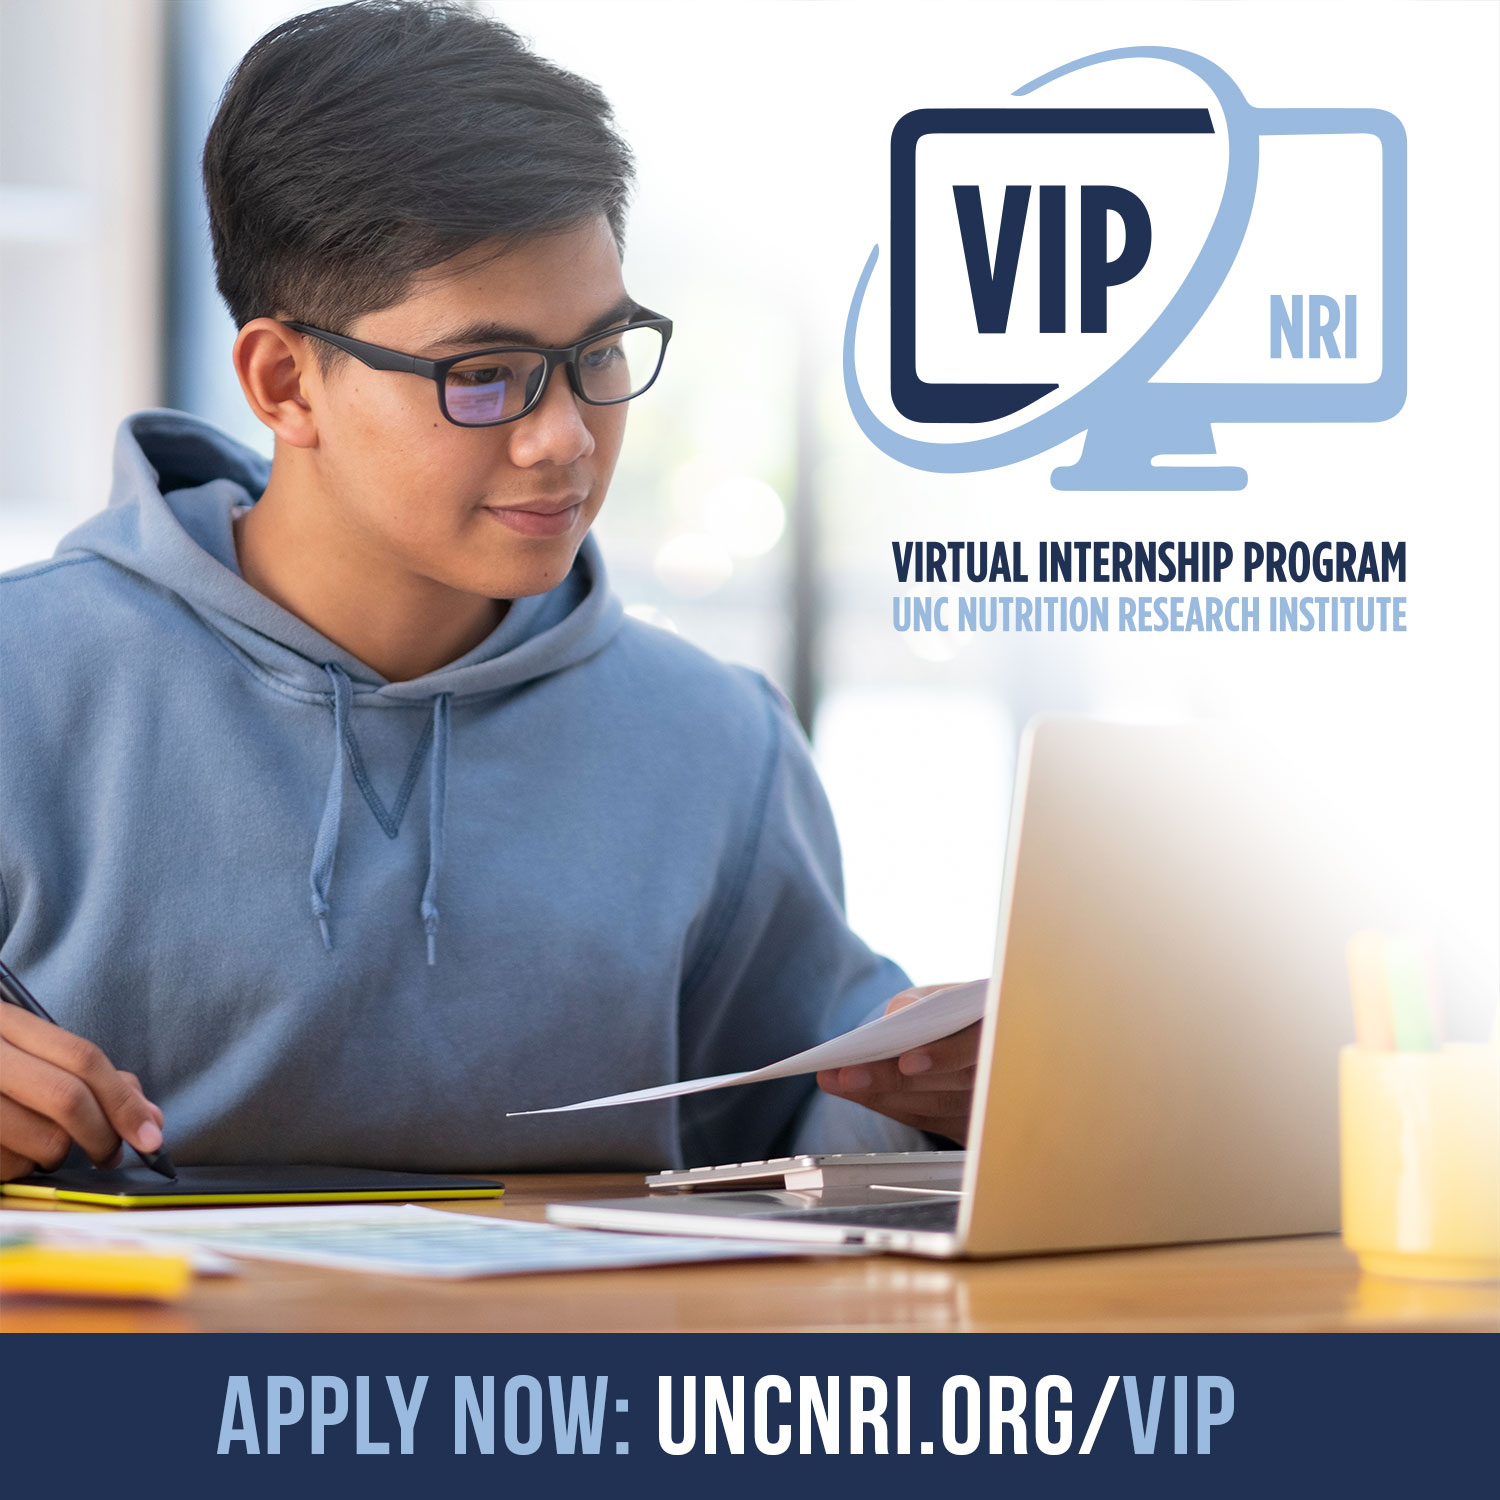 Virtual Internship Program is accepting applications